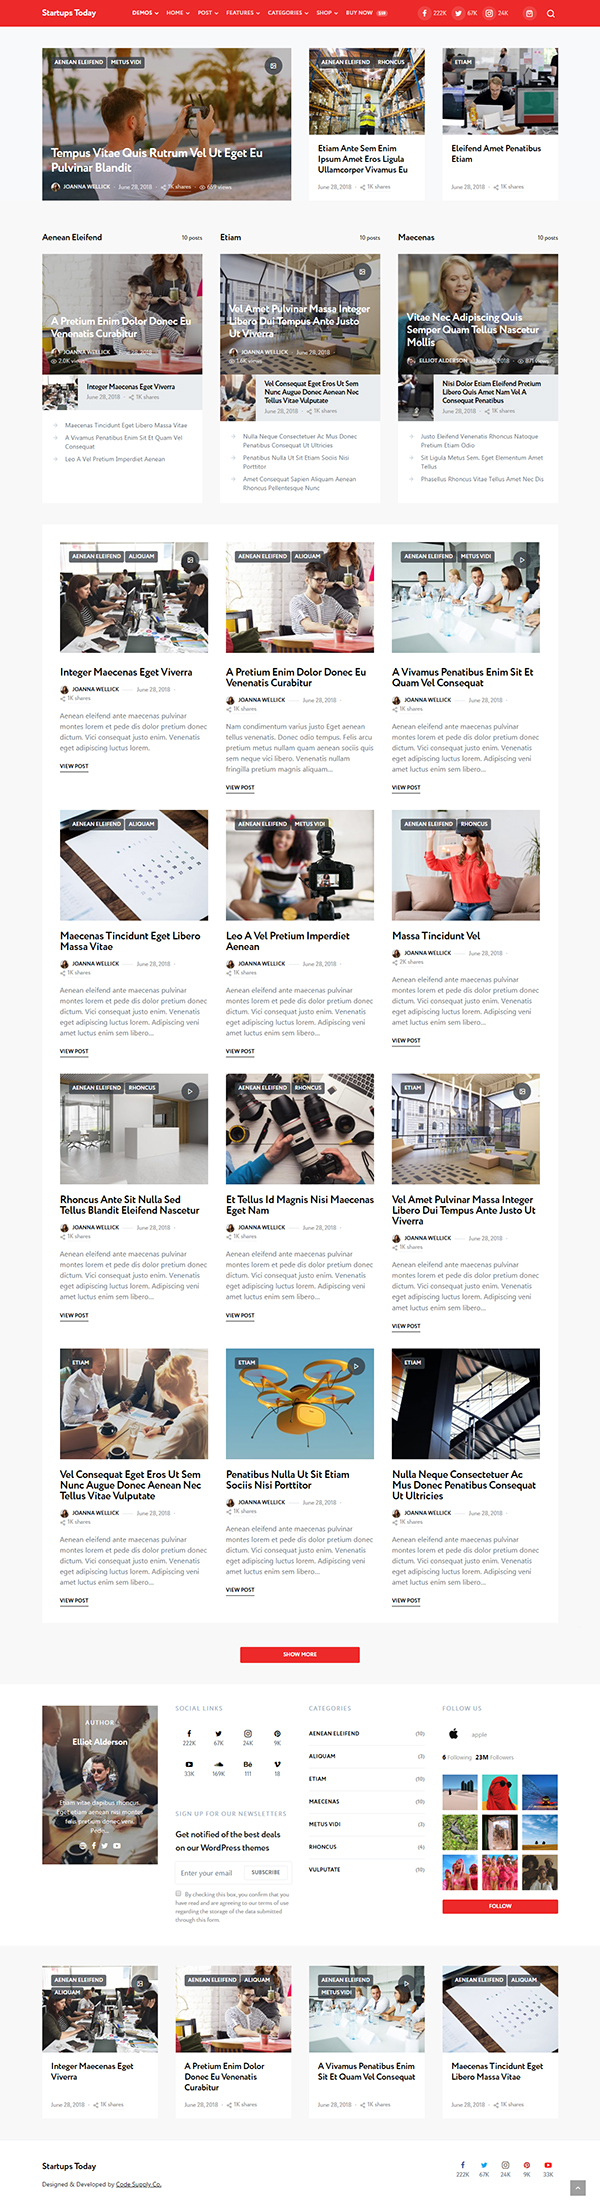 Expertly - WordPress Blog & Magazine Theme for Professionals